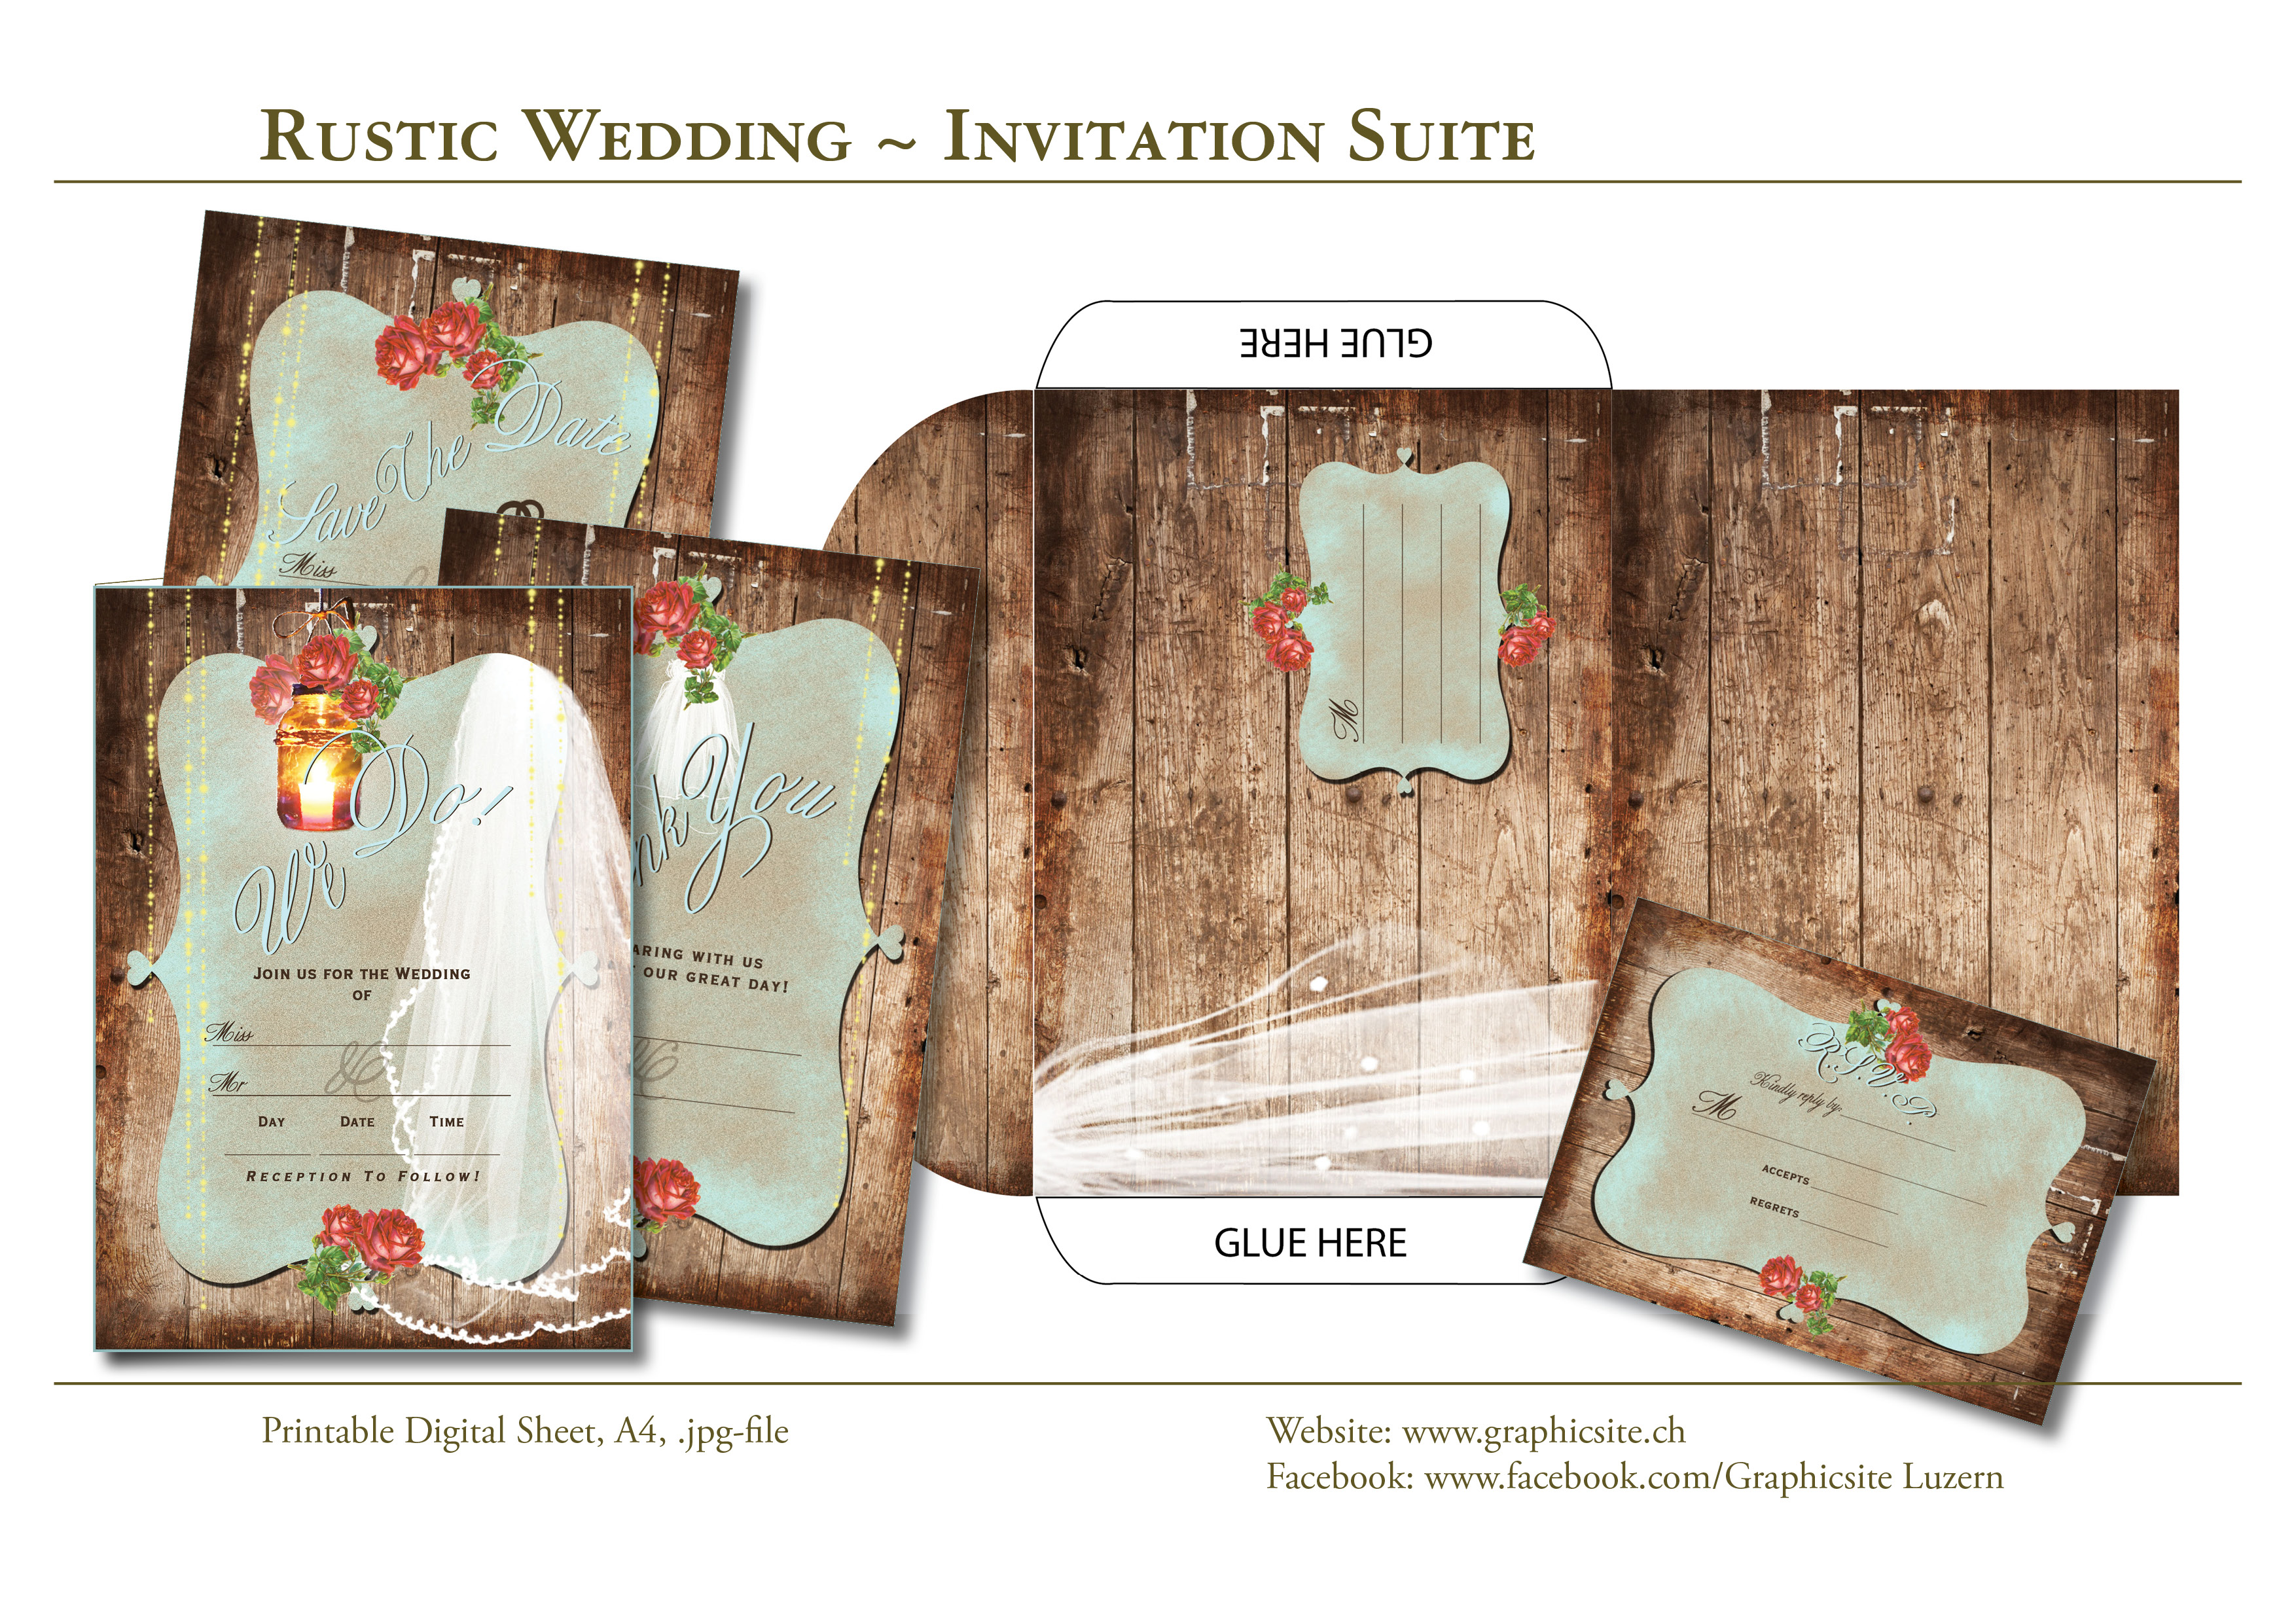 Printable Digital Sheets - Wedding Invitation Suite - Rustic Wedding - Cards, Greeting Cards, Invitation, Wedding, Graphic Design, Luzern,